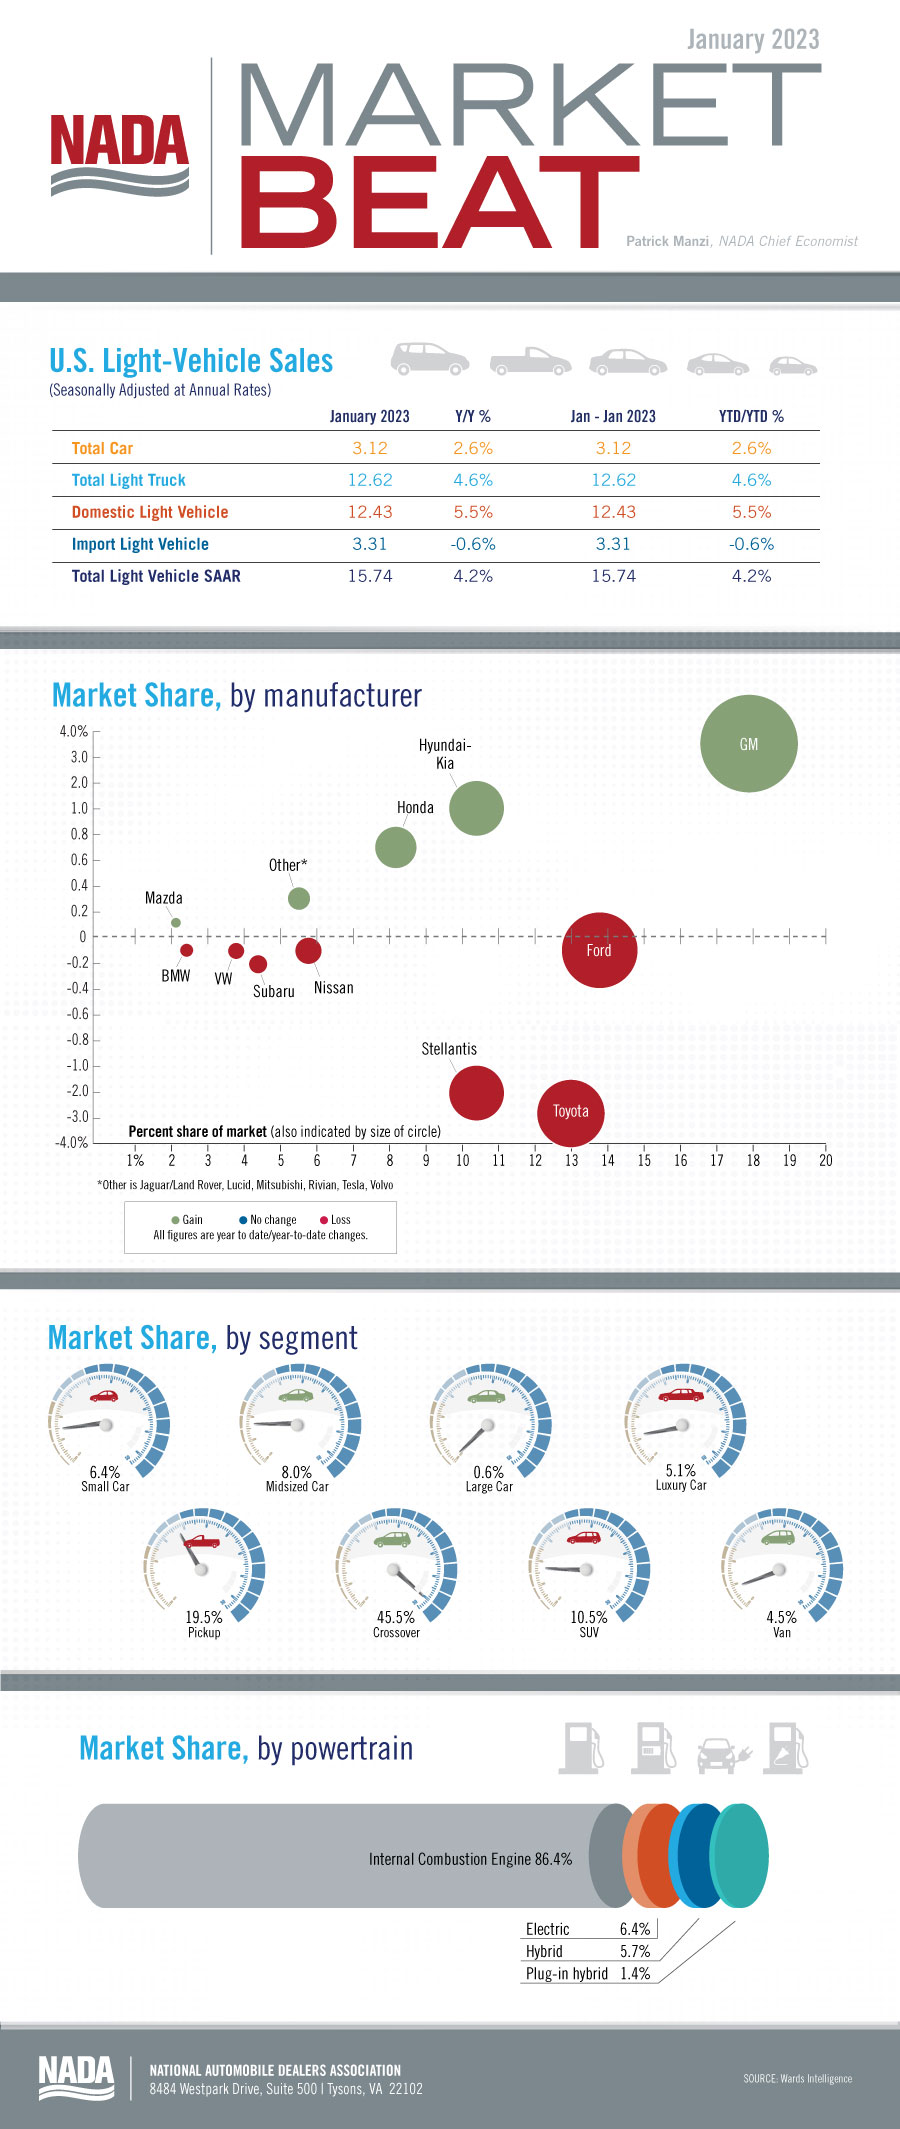 Jan 2023 Market Beat infographic